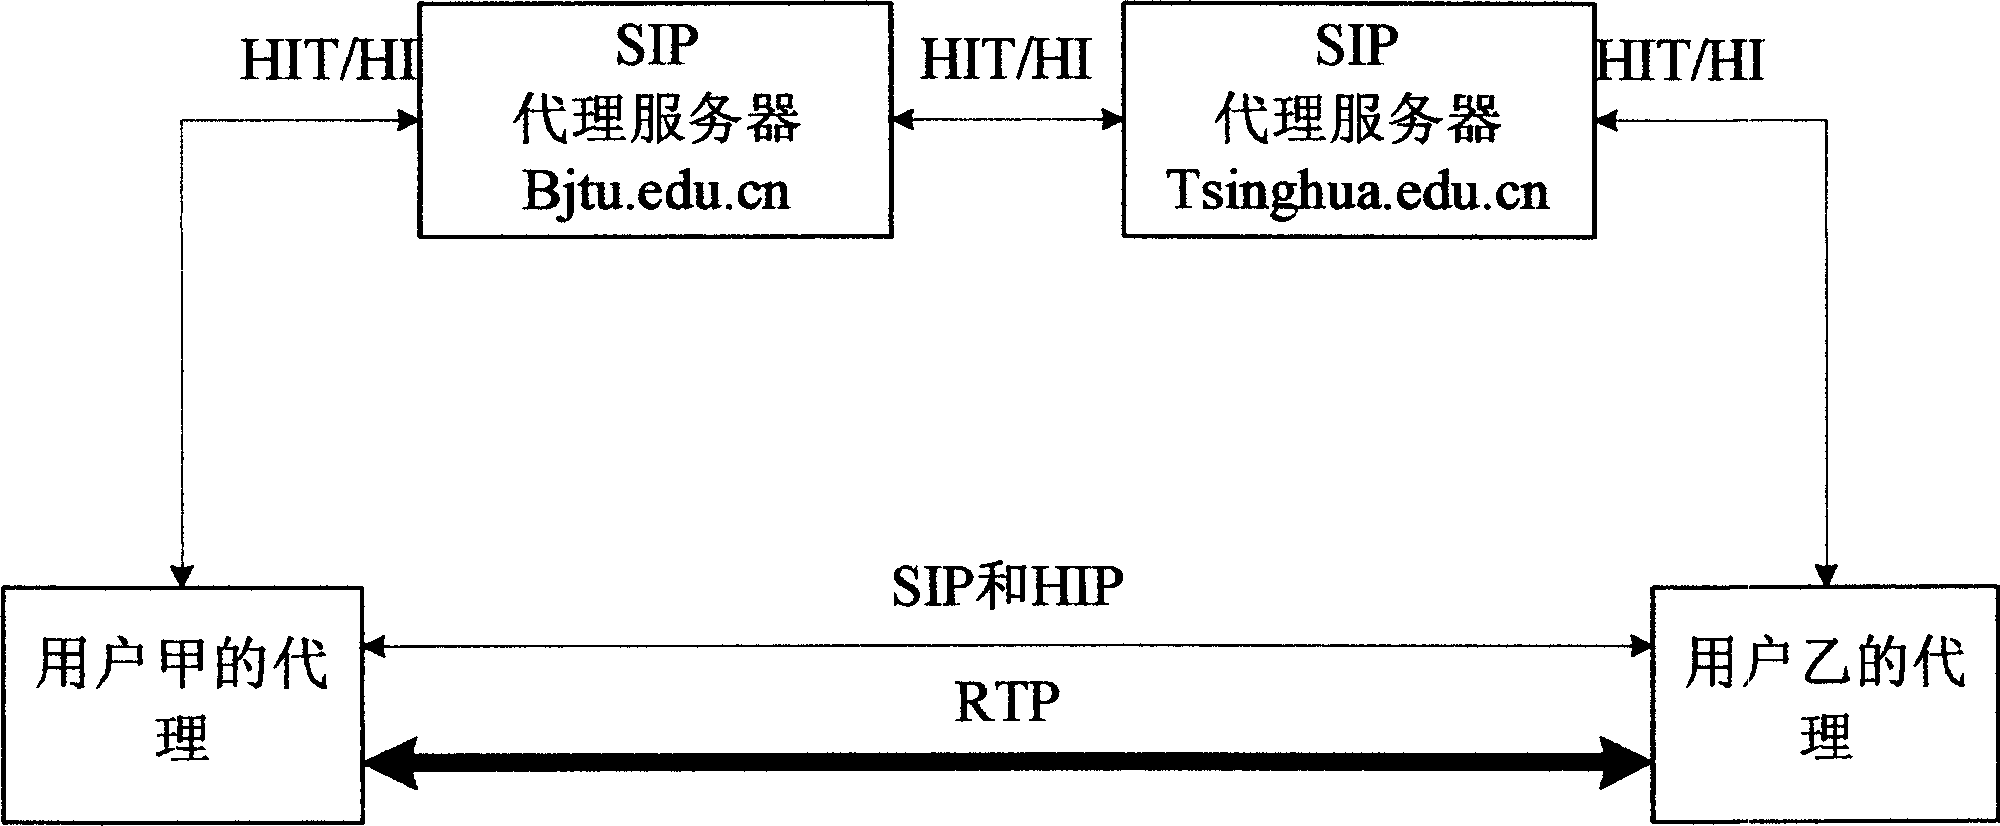 P2P network SIP realizing method based on host machine mark protocol